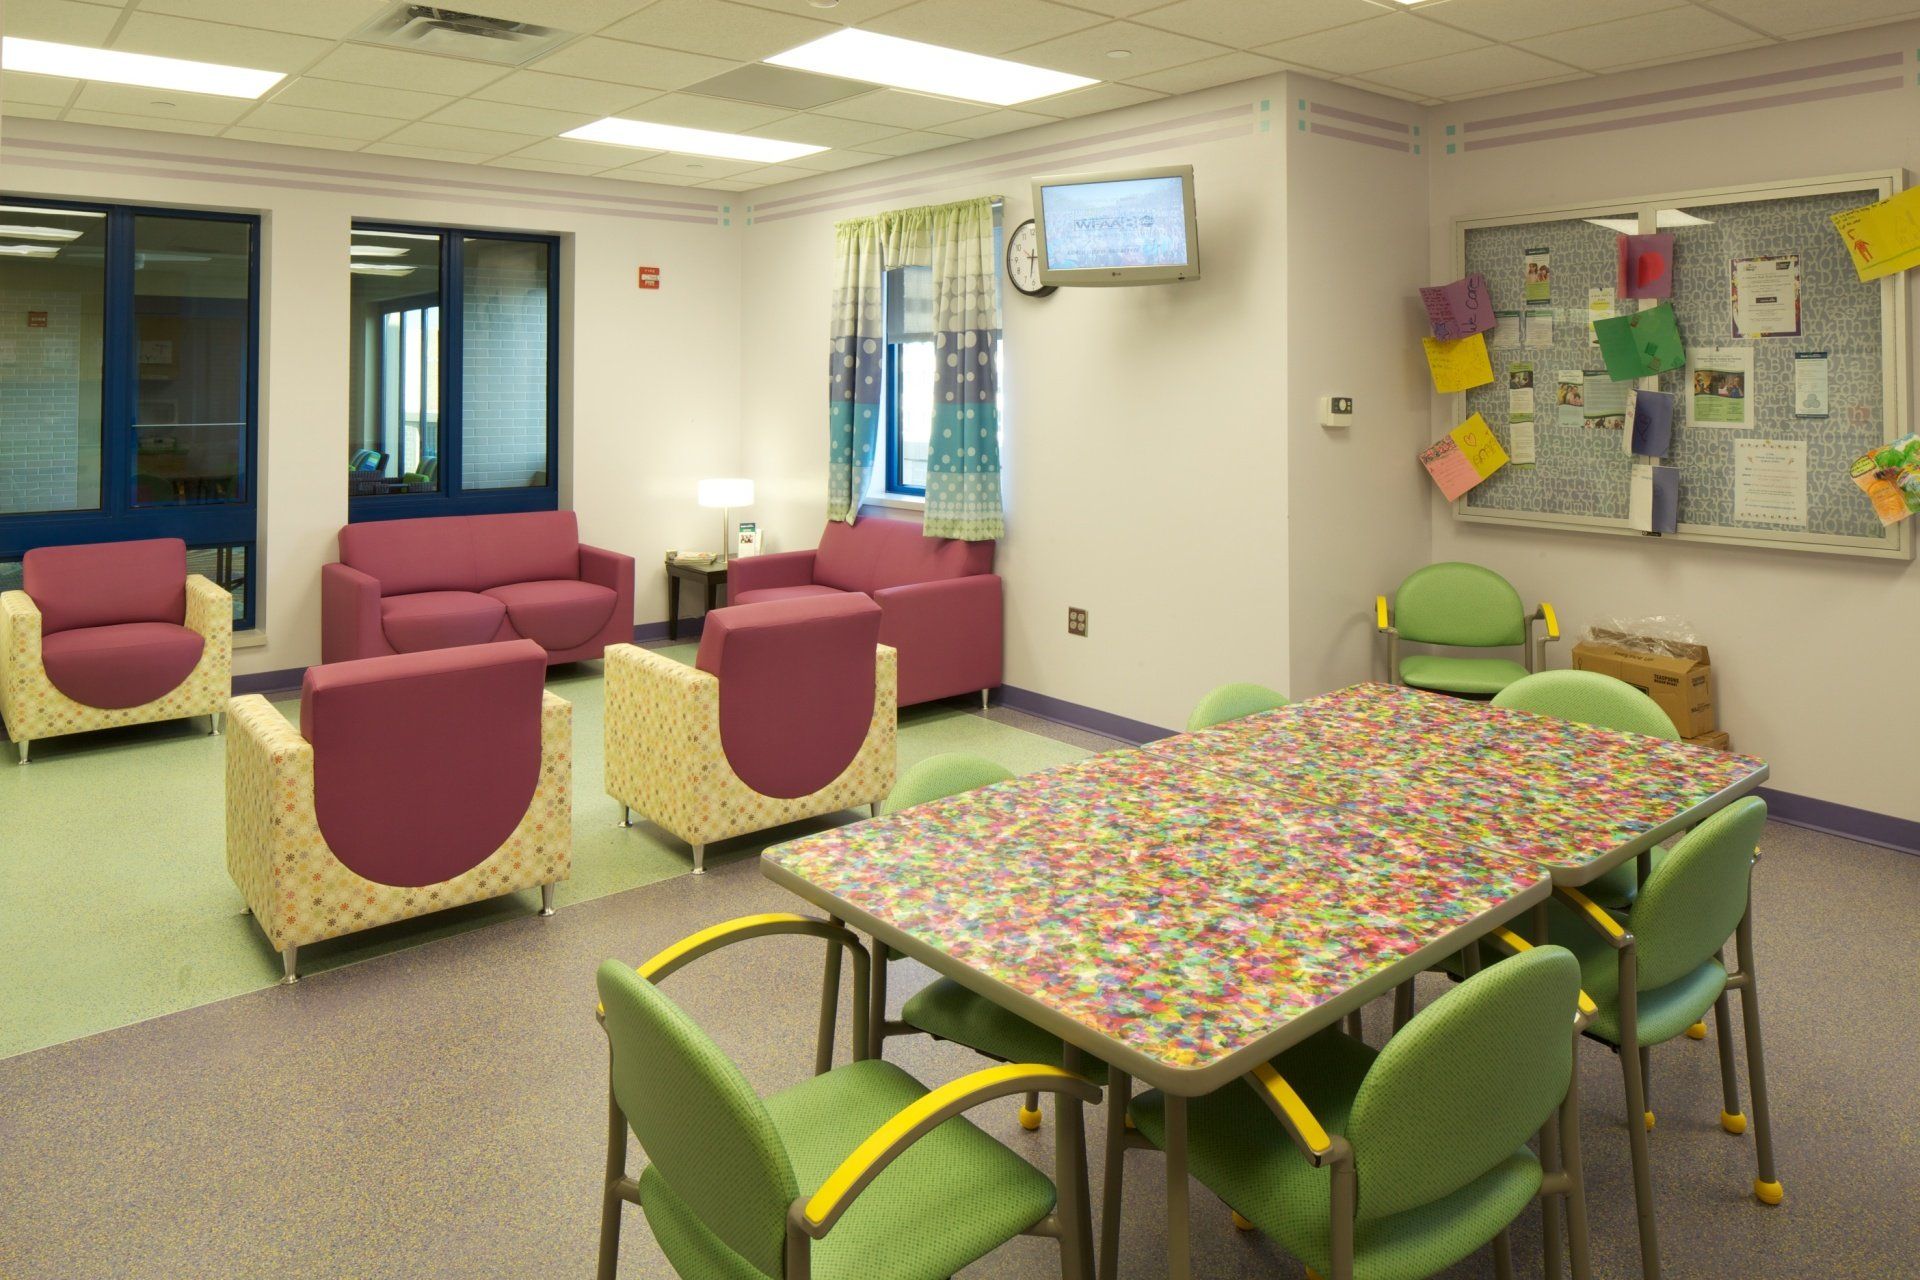 Children's hospital table area